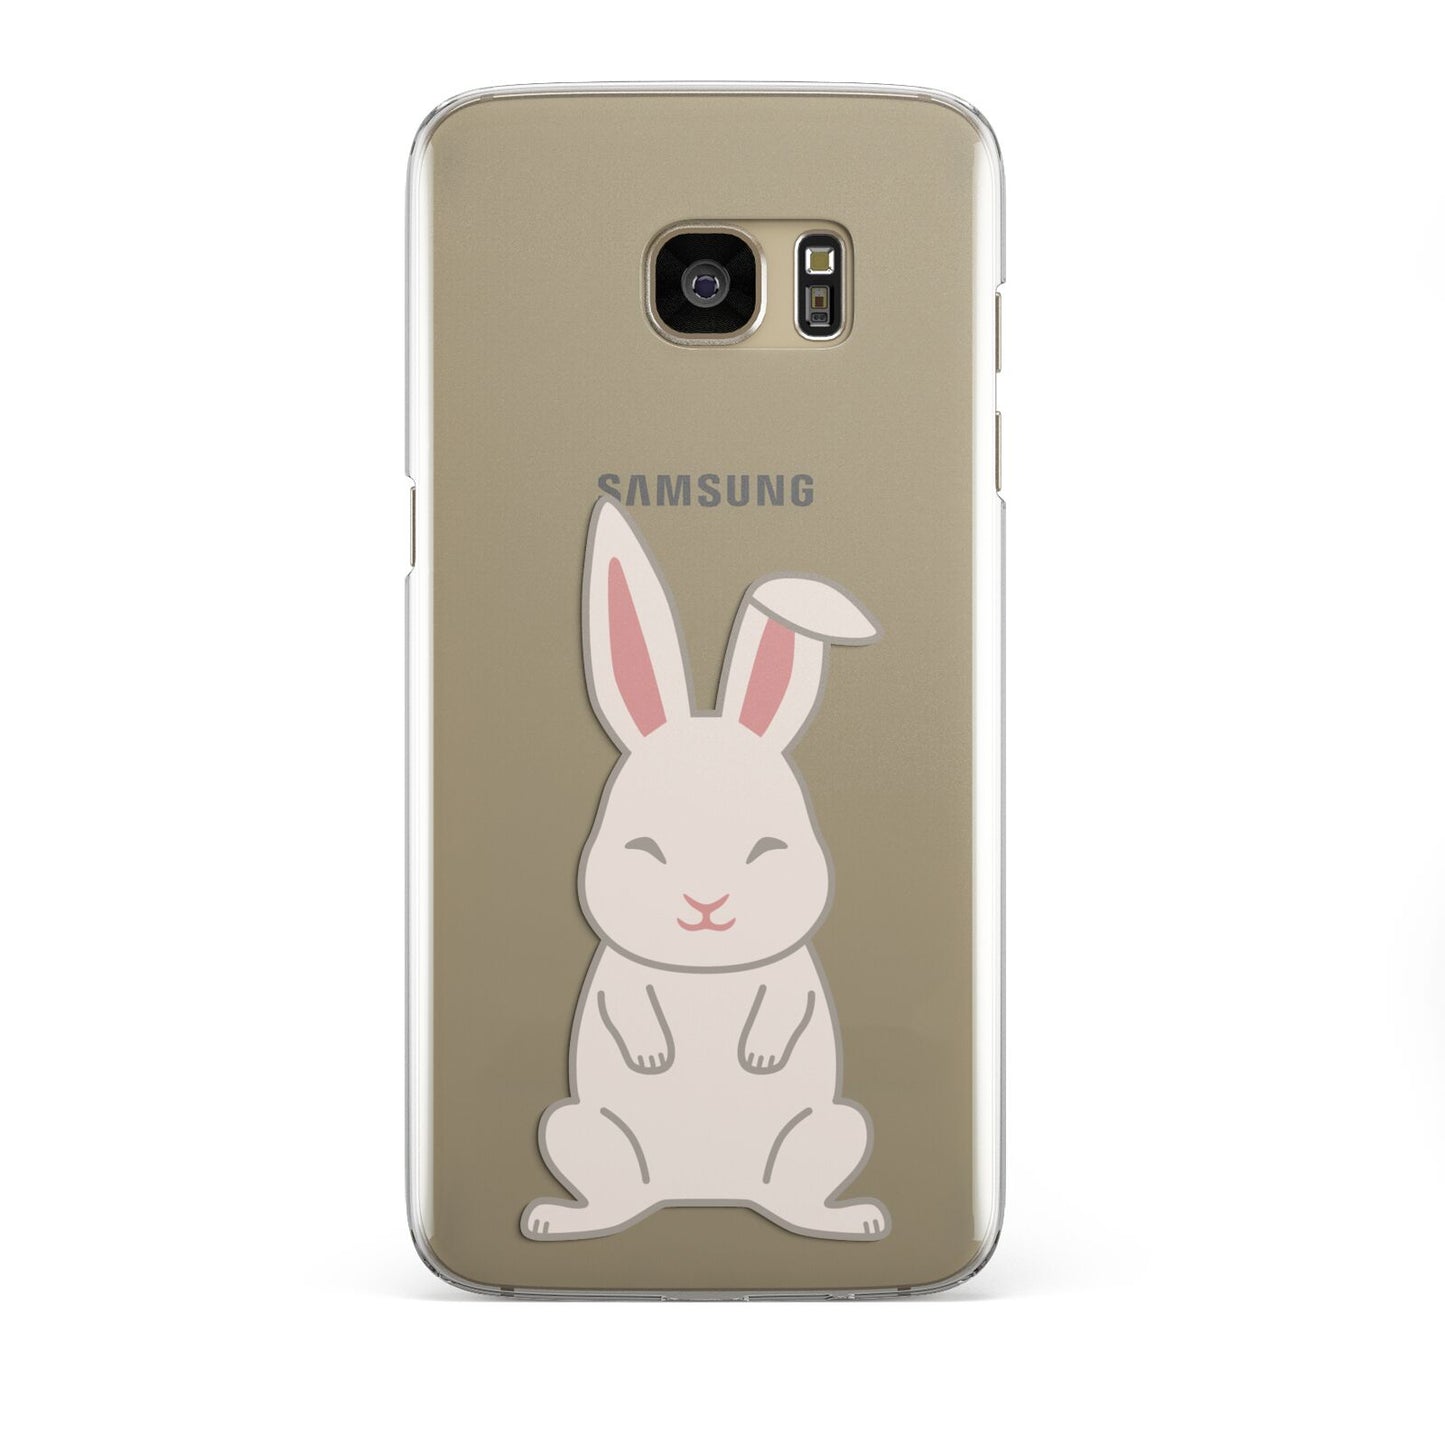 Bunny Samsung Galaxy S7 Edge Case